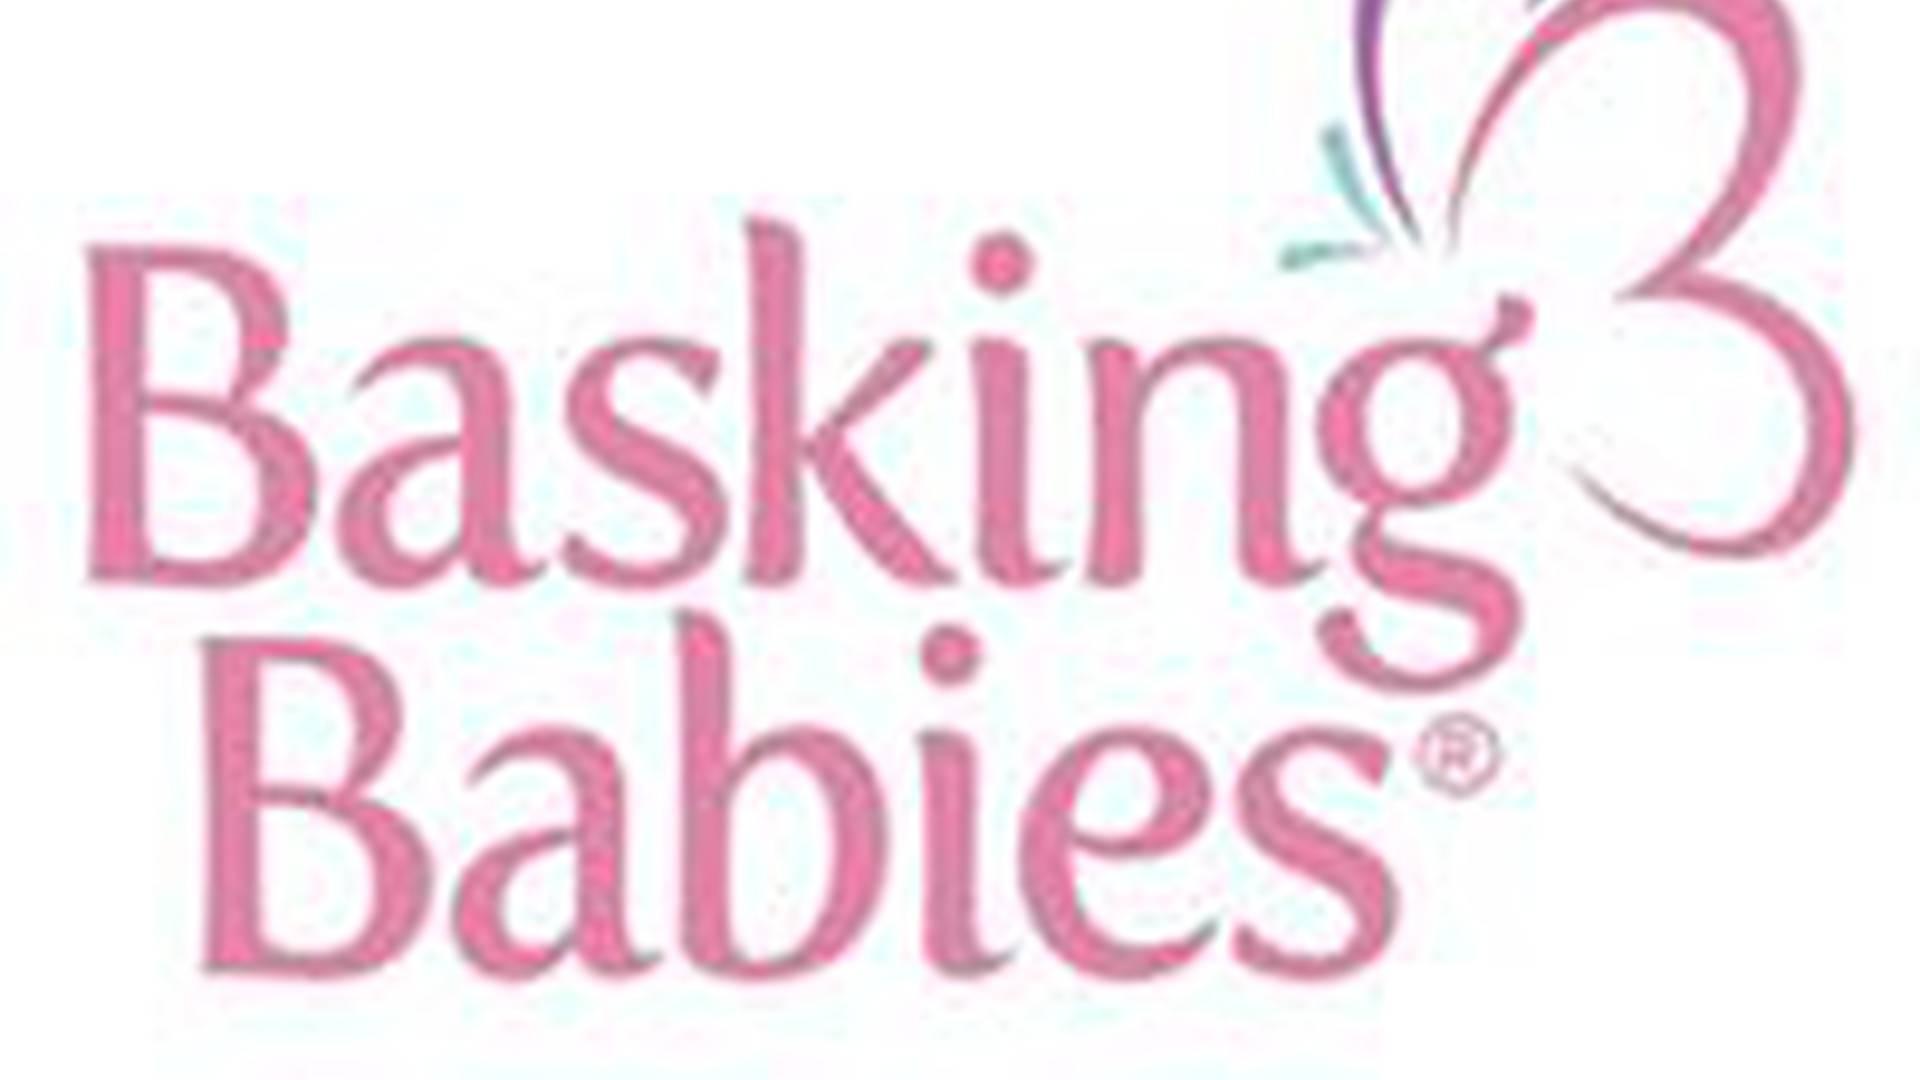 Basking Babies photo